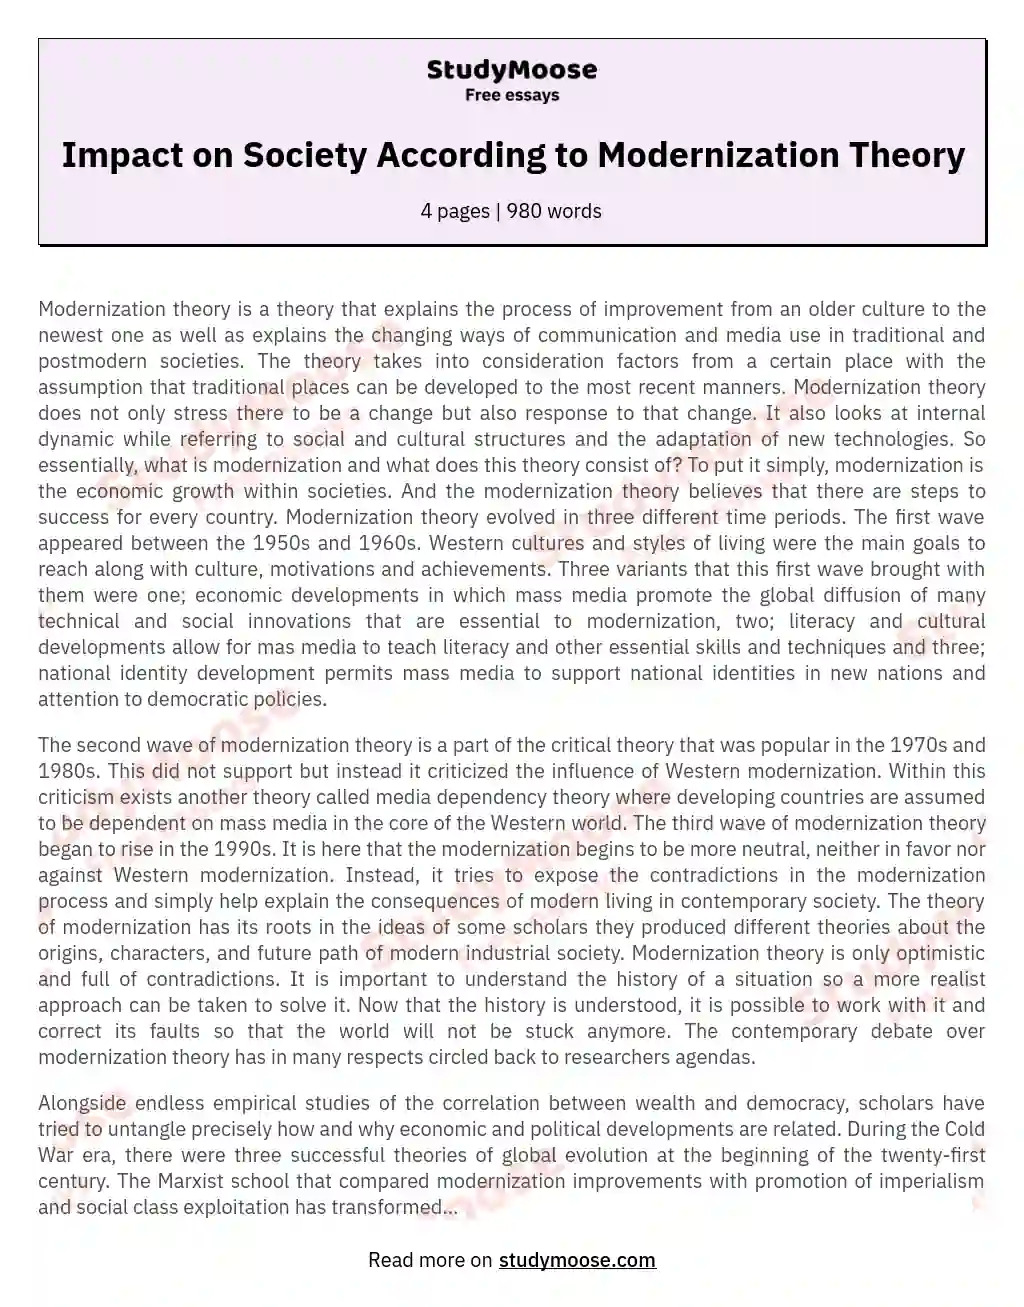 globalization and modernization essay